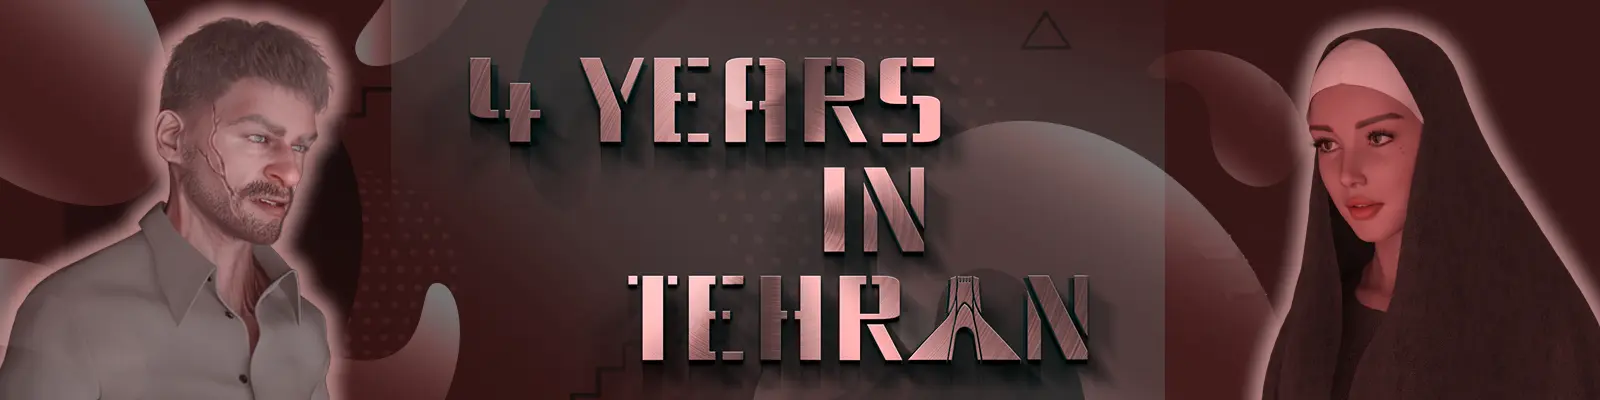 4 Years in Tehran [v0.3] header image